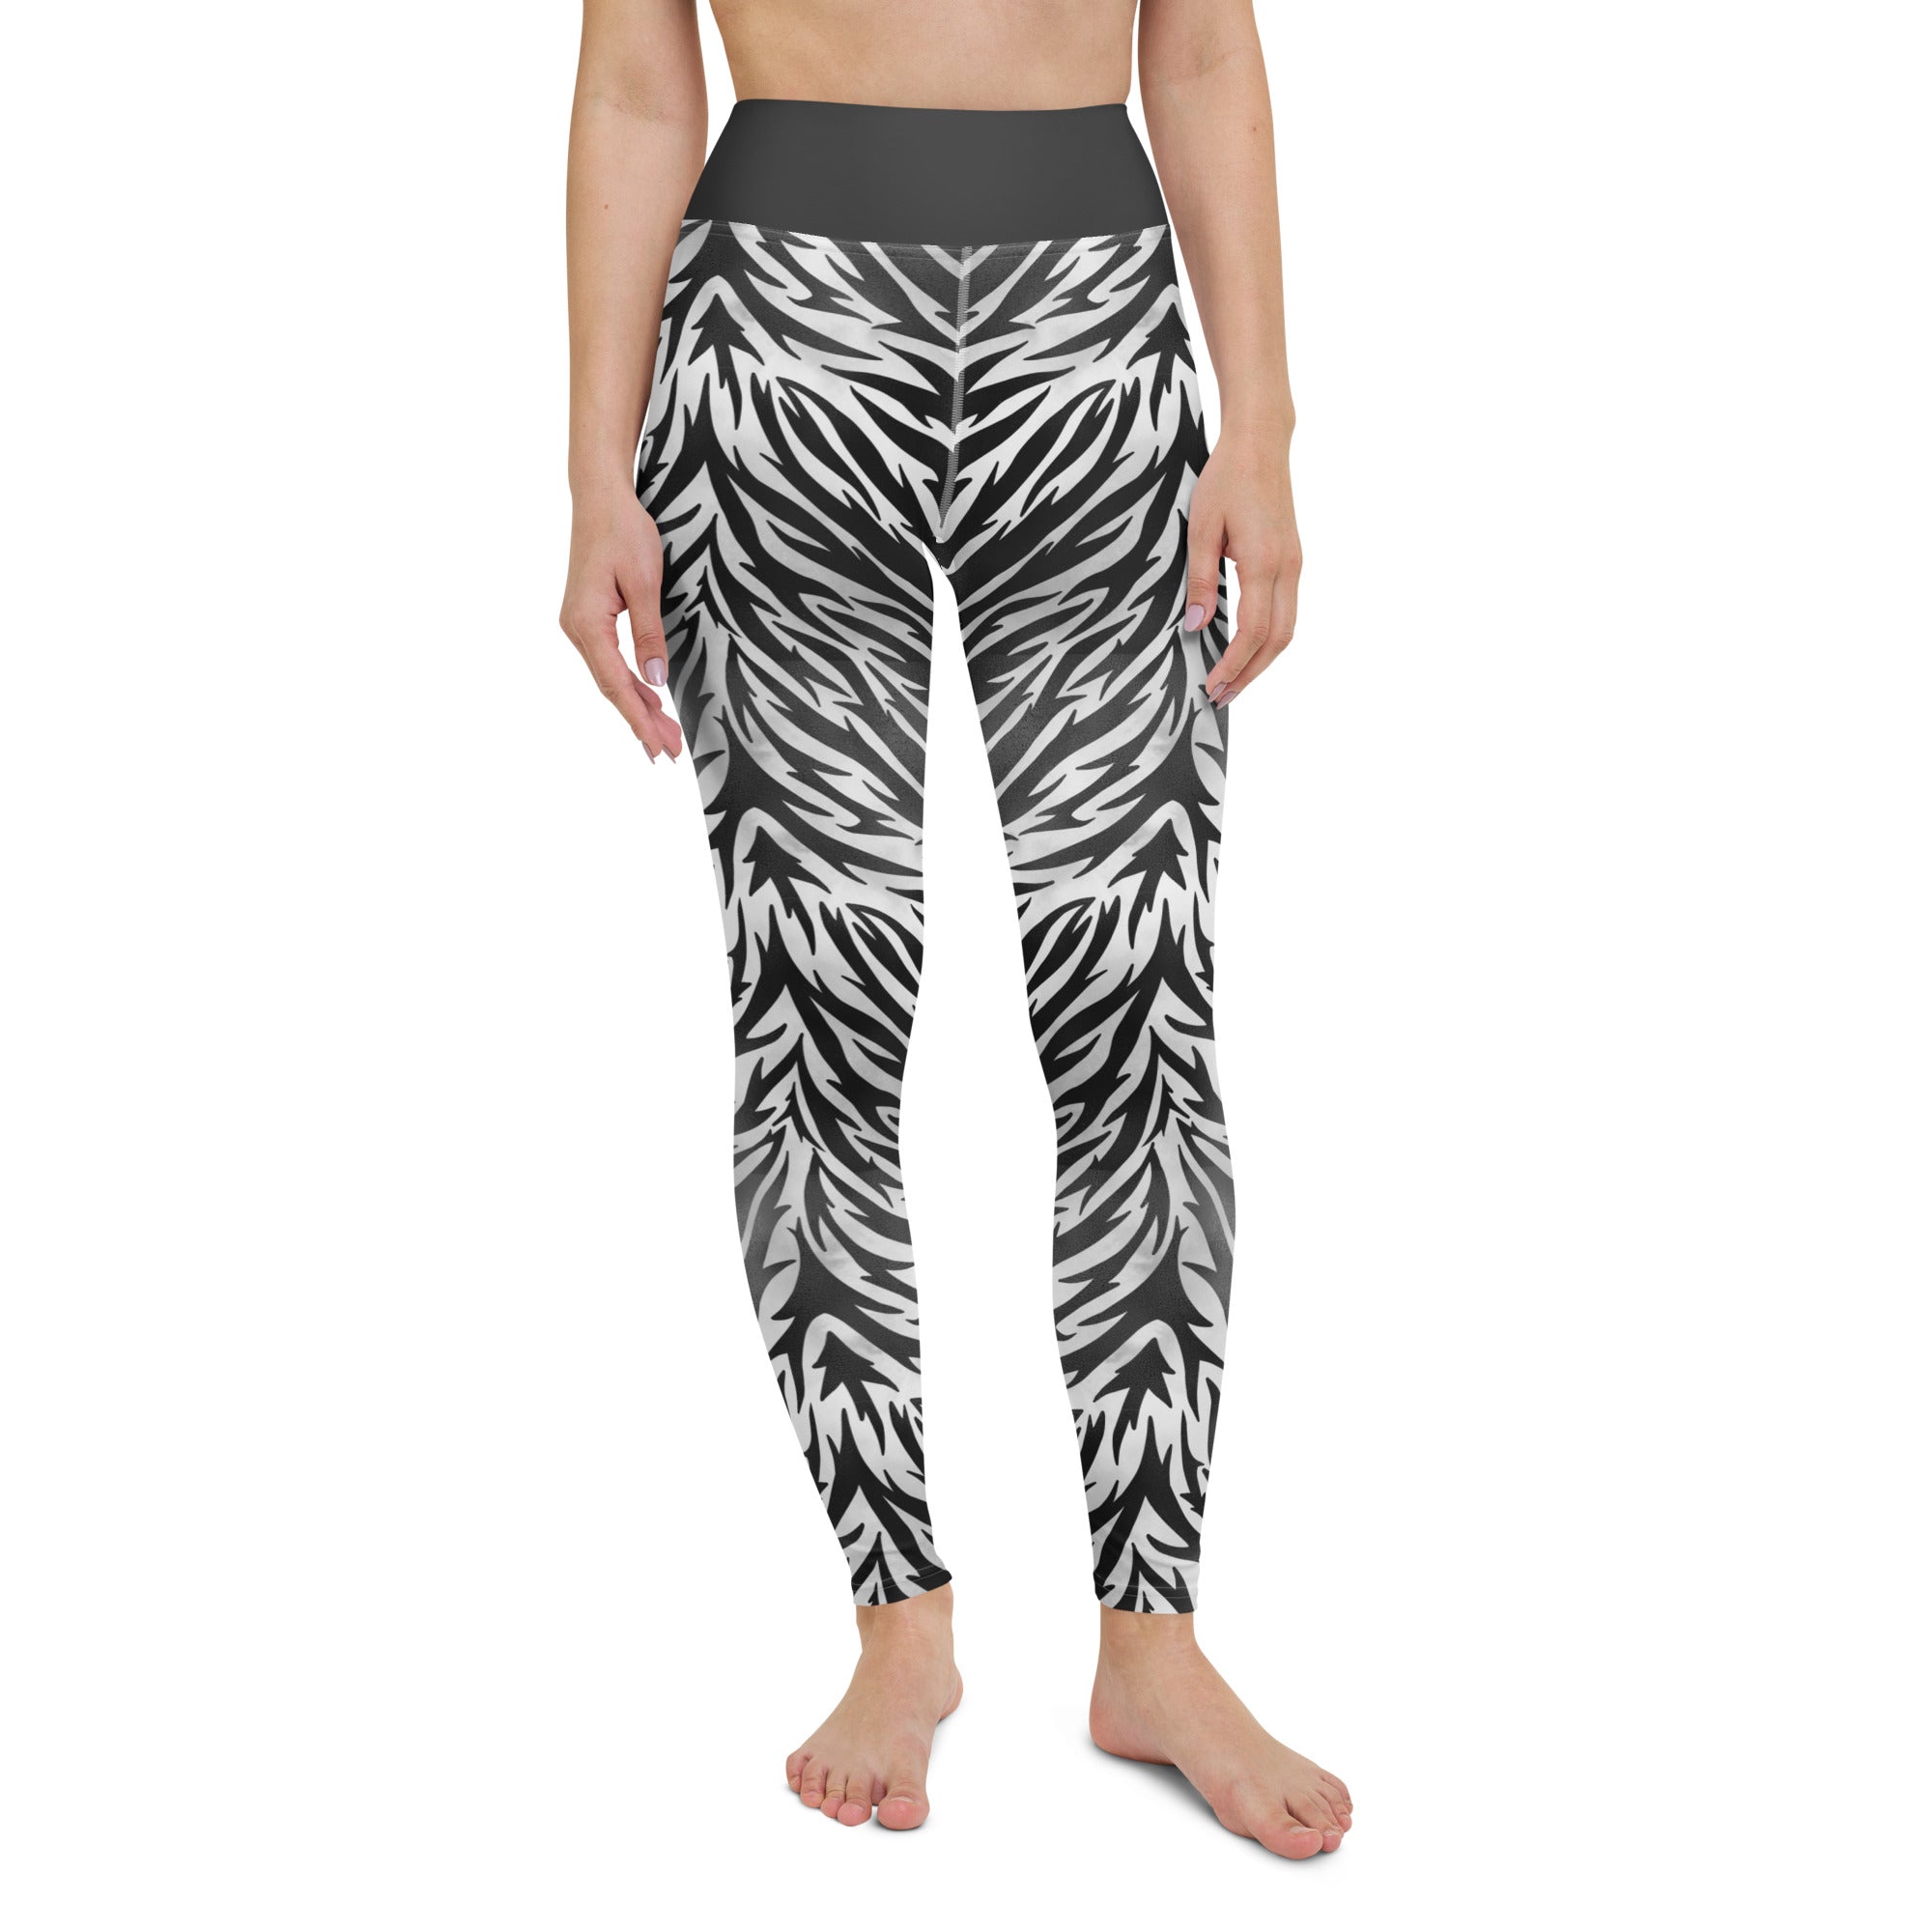 Yoga Leggings- Zebra print Black and White